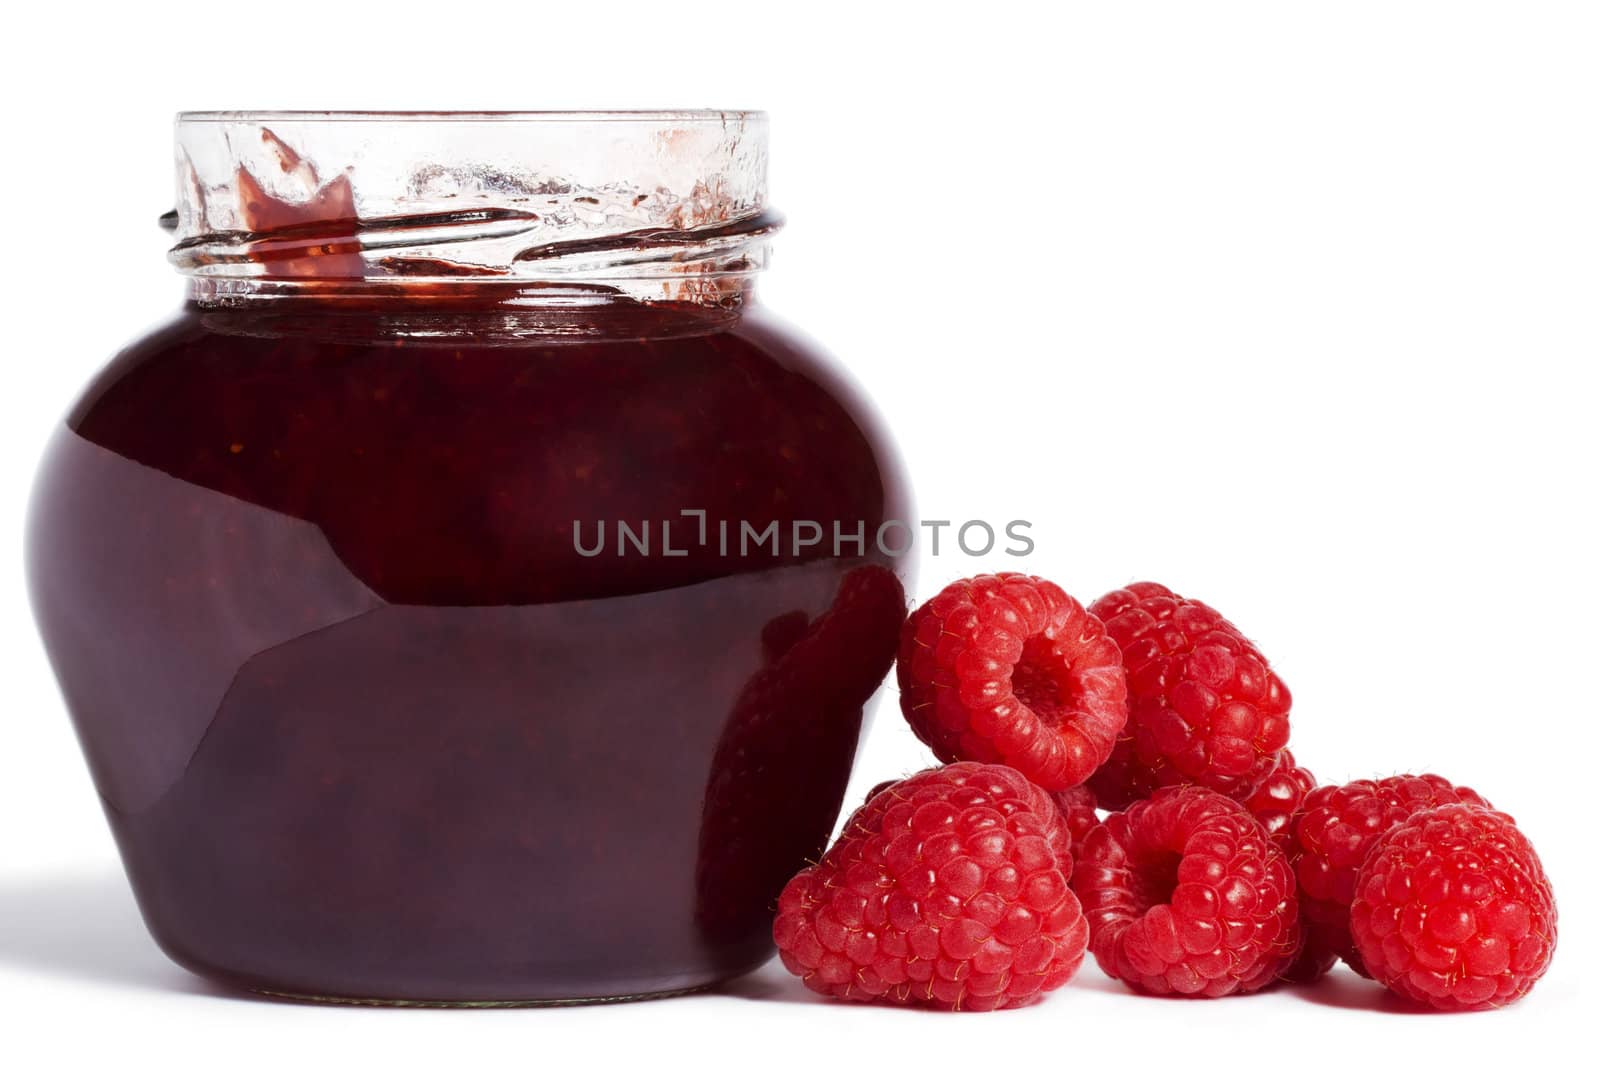  raspberry jam jar with raspberries aside on white background